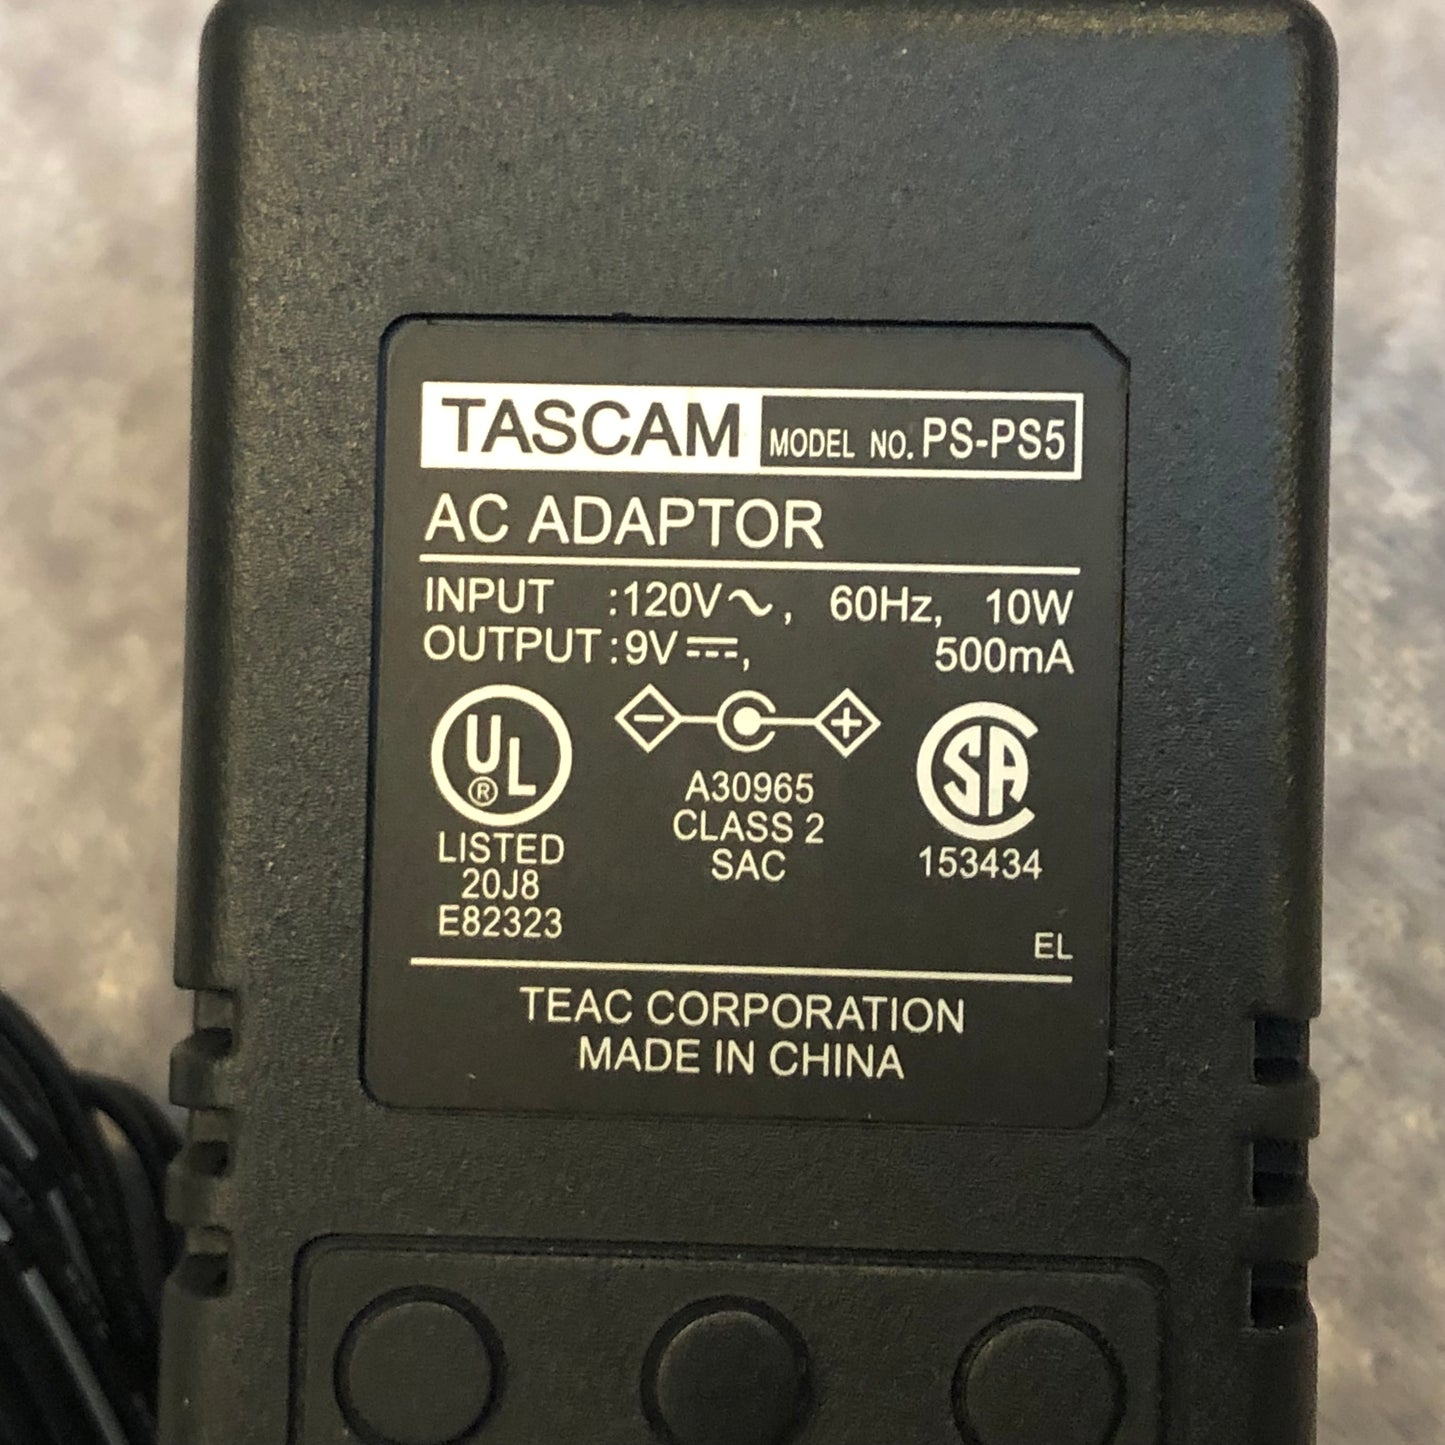 Tascam P5-PS5 9V 500mA Positive Center Power Supply